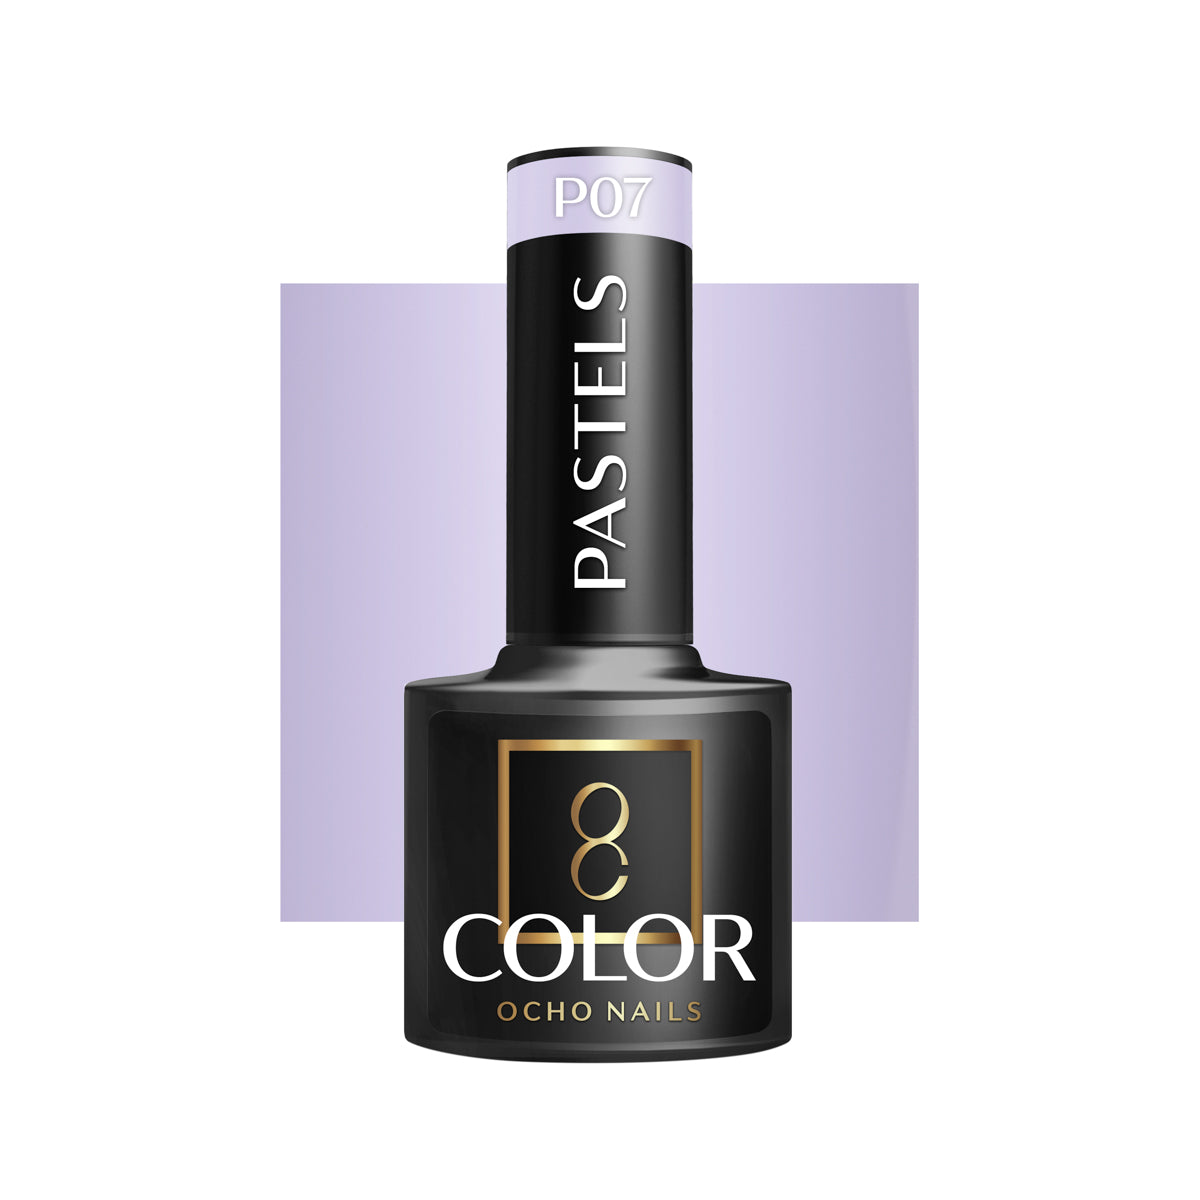 OCHO NAILS Hybride nagellak pastels P07 -5 g